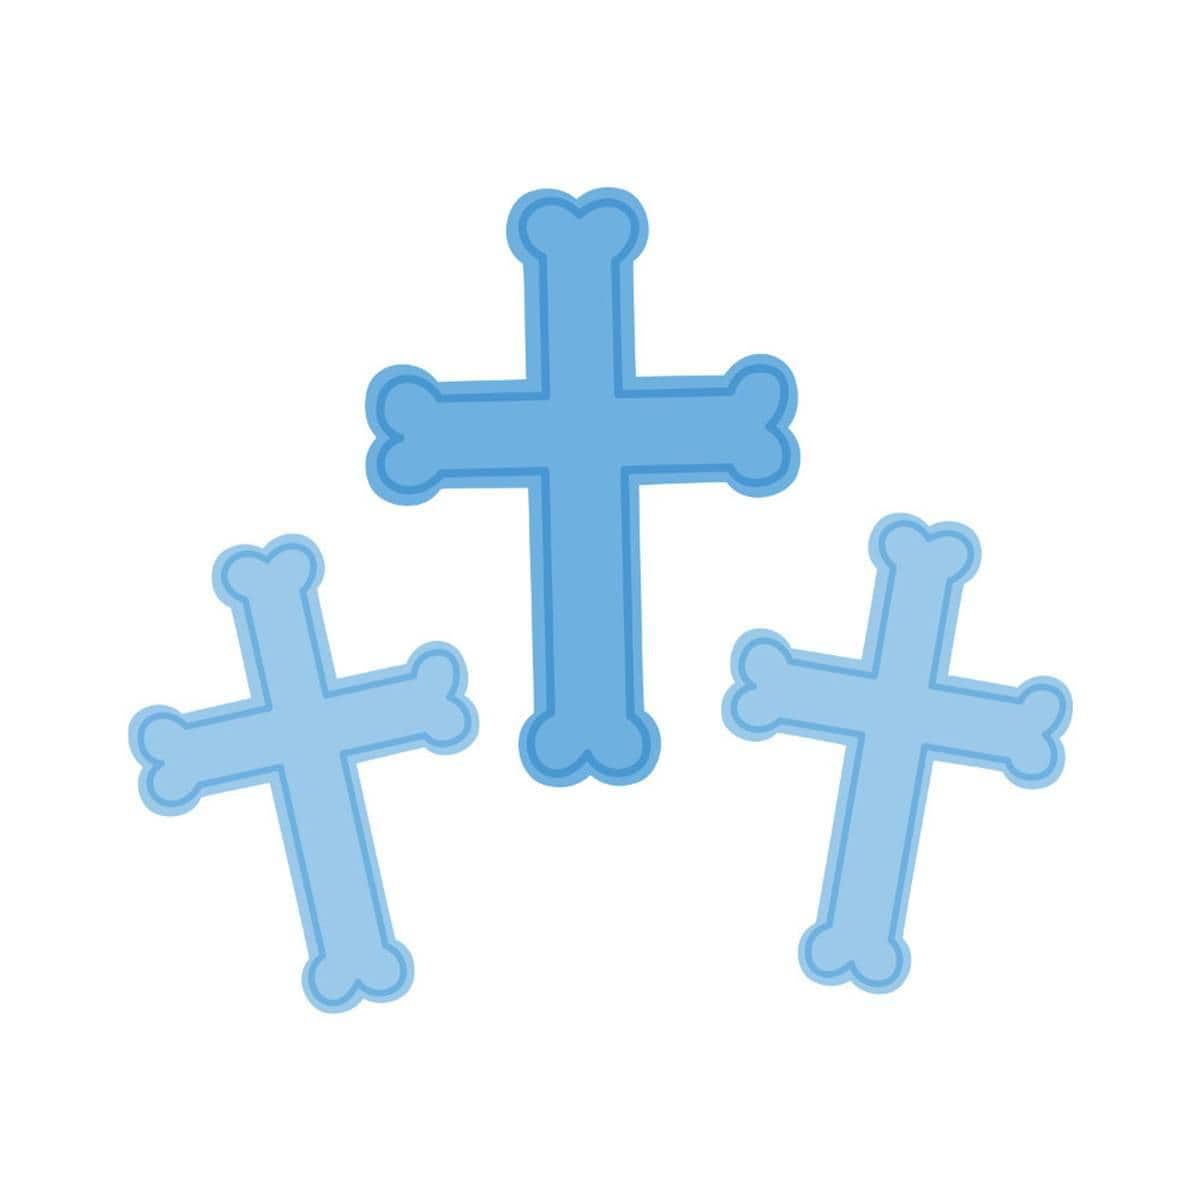 Buy Religious Crosses Foil Cutouts - Blue 3/pkg. sold at Party Expert